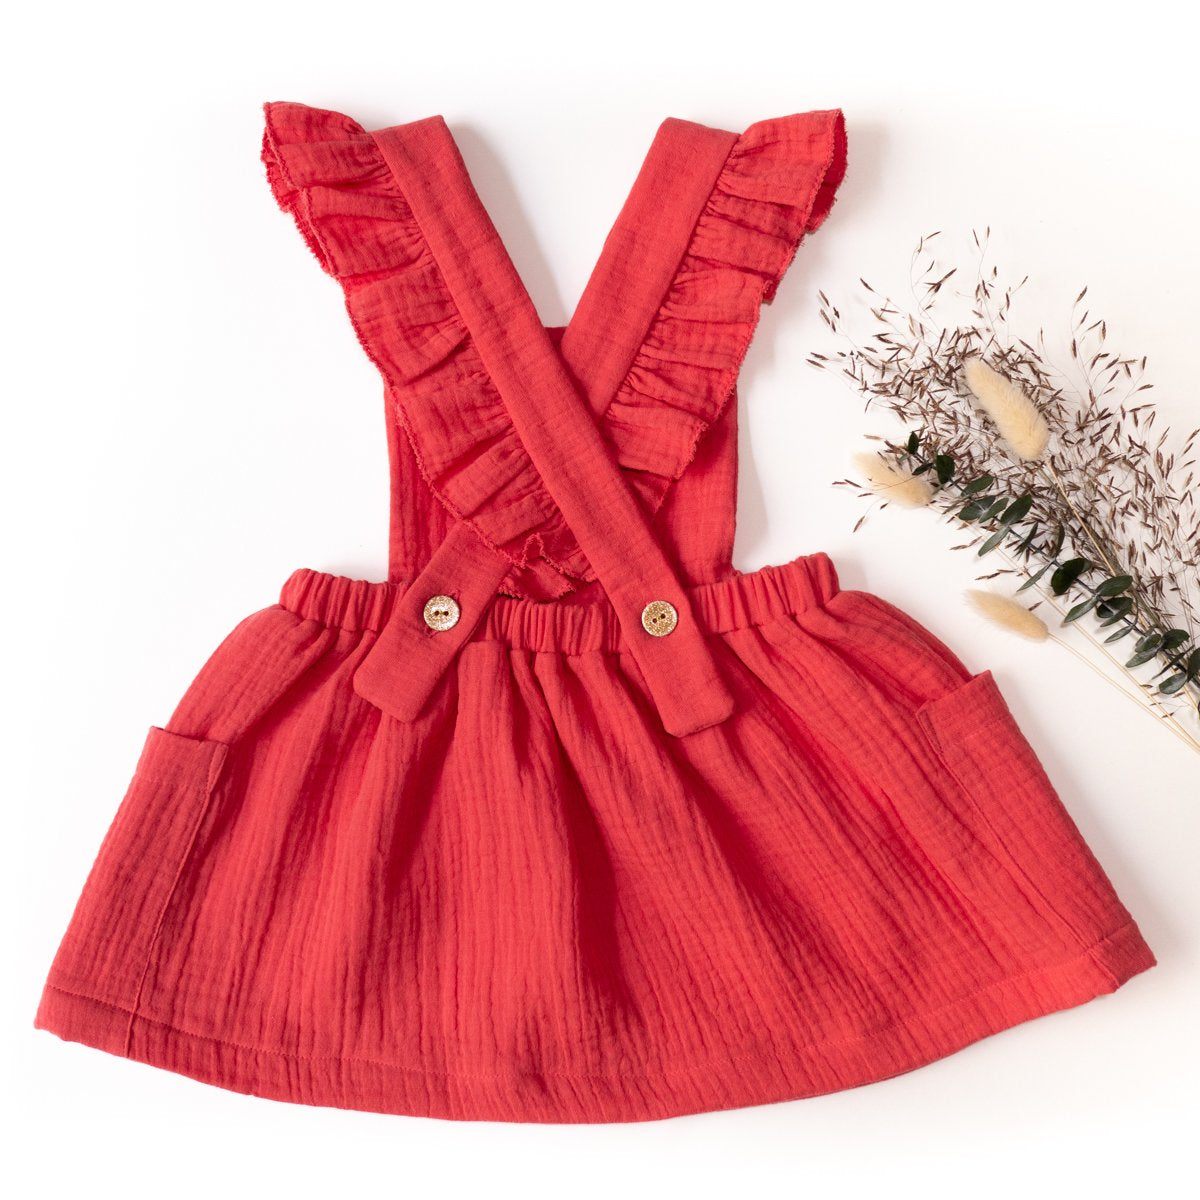 Ikatee - MILANO Dress - Babies 6M-4Y - Paper Sewing Pattern